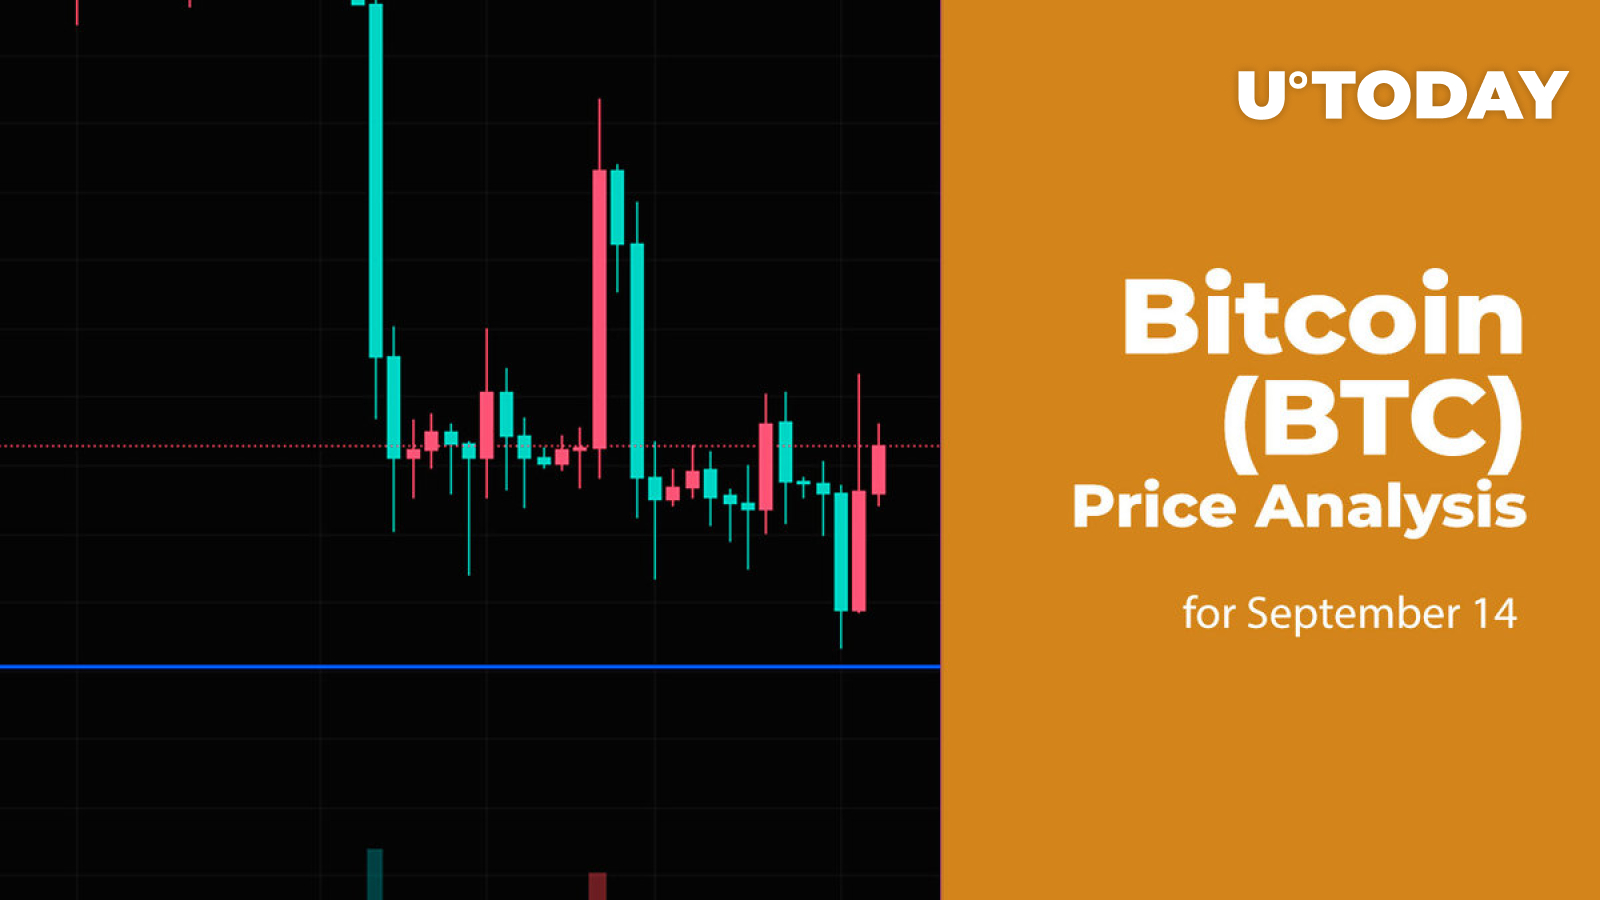 Bitcoin (BTC) Price Analysis for September 14